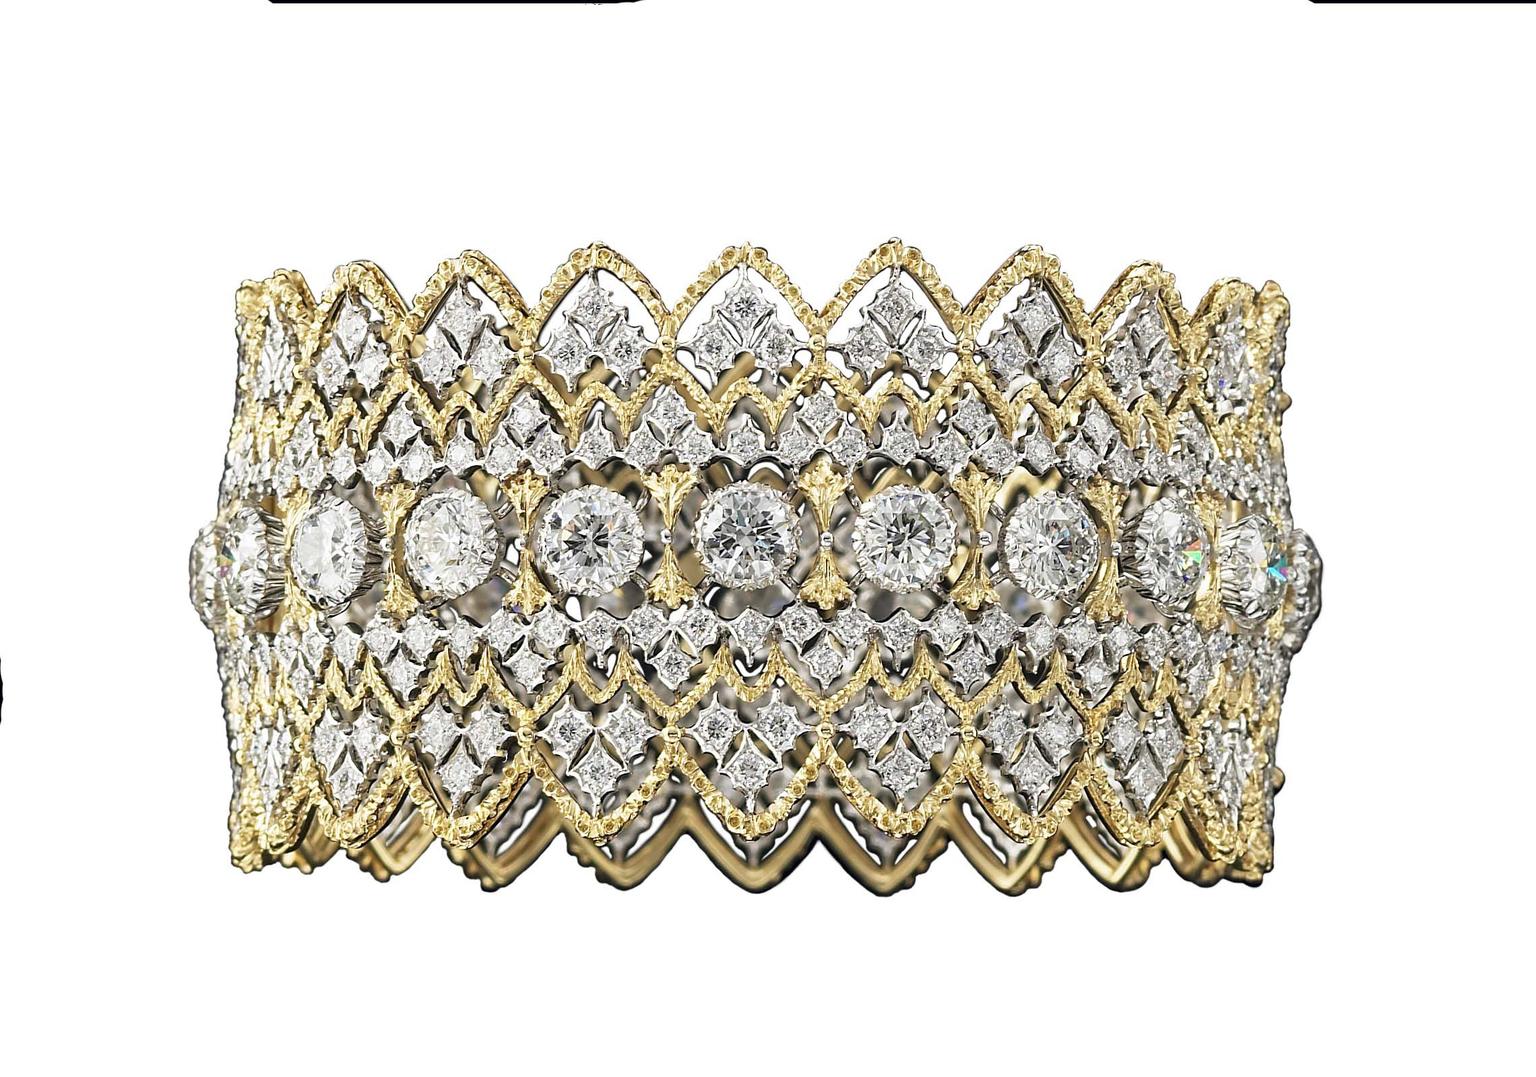 Buccellati gold lace-effect cuff bracelet with diamonds.